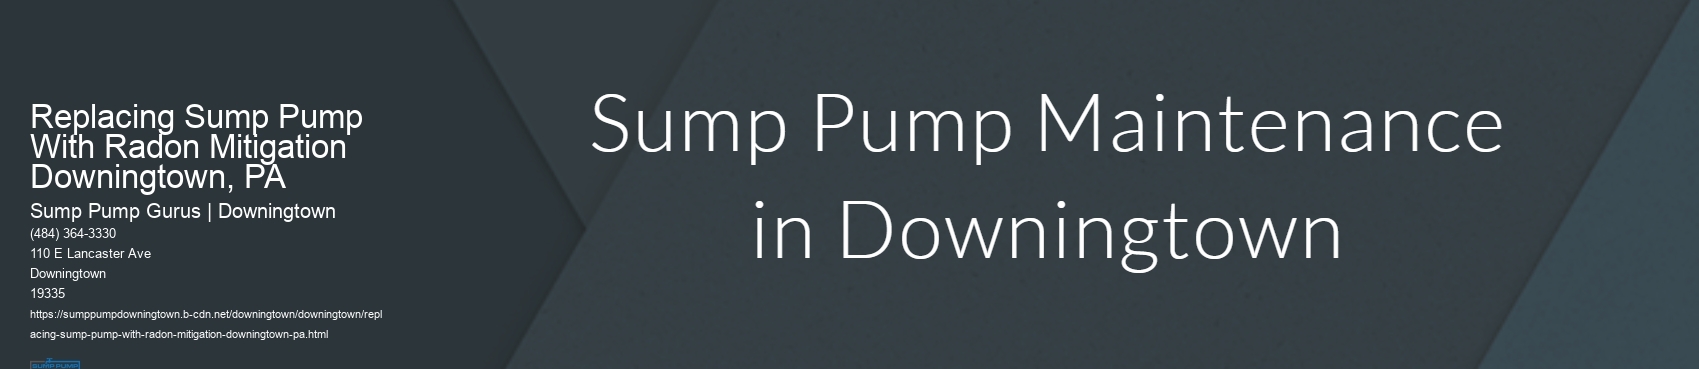 Replacing Sump Pump With Radon Mitigation Downingtown, PA